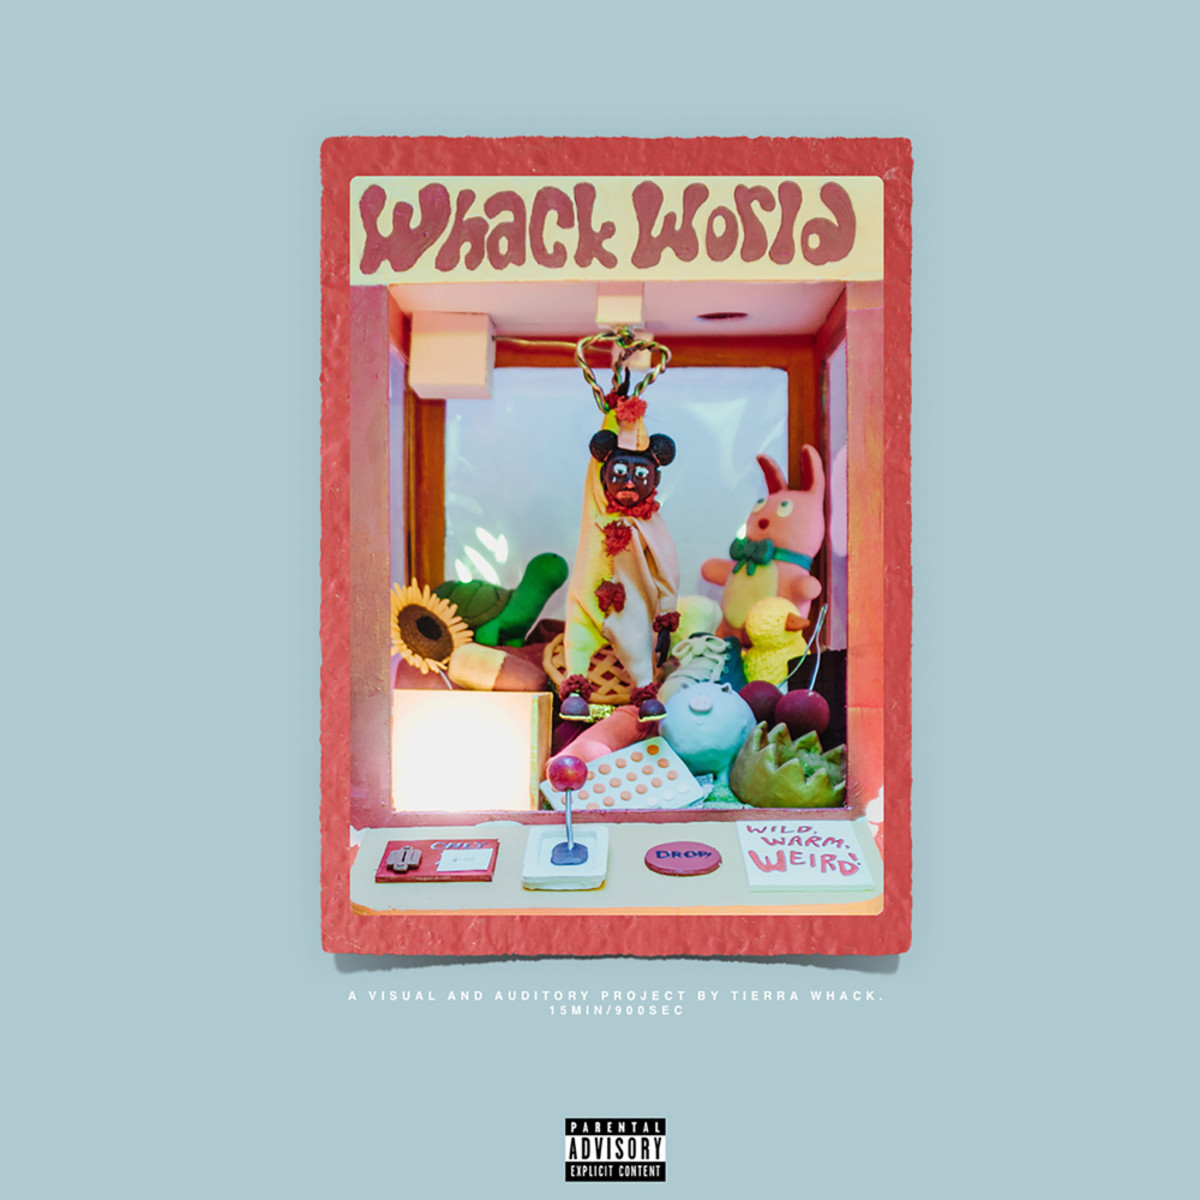 tierra-whack-whack-world-album-art